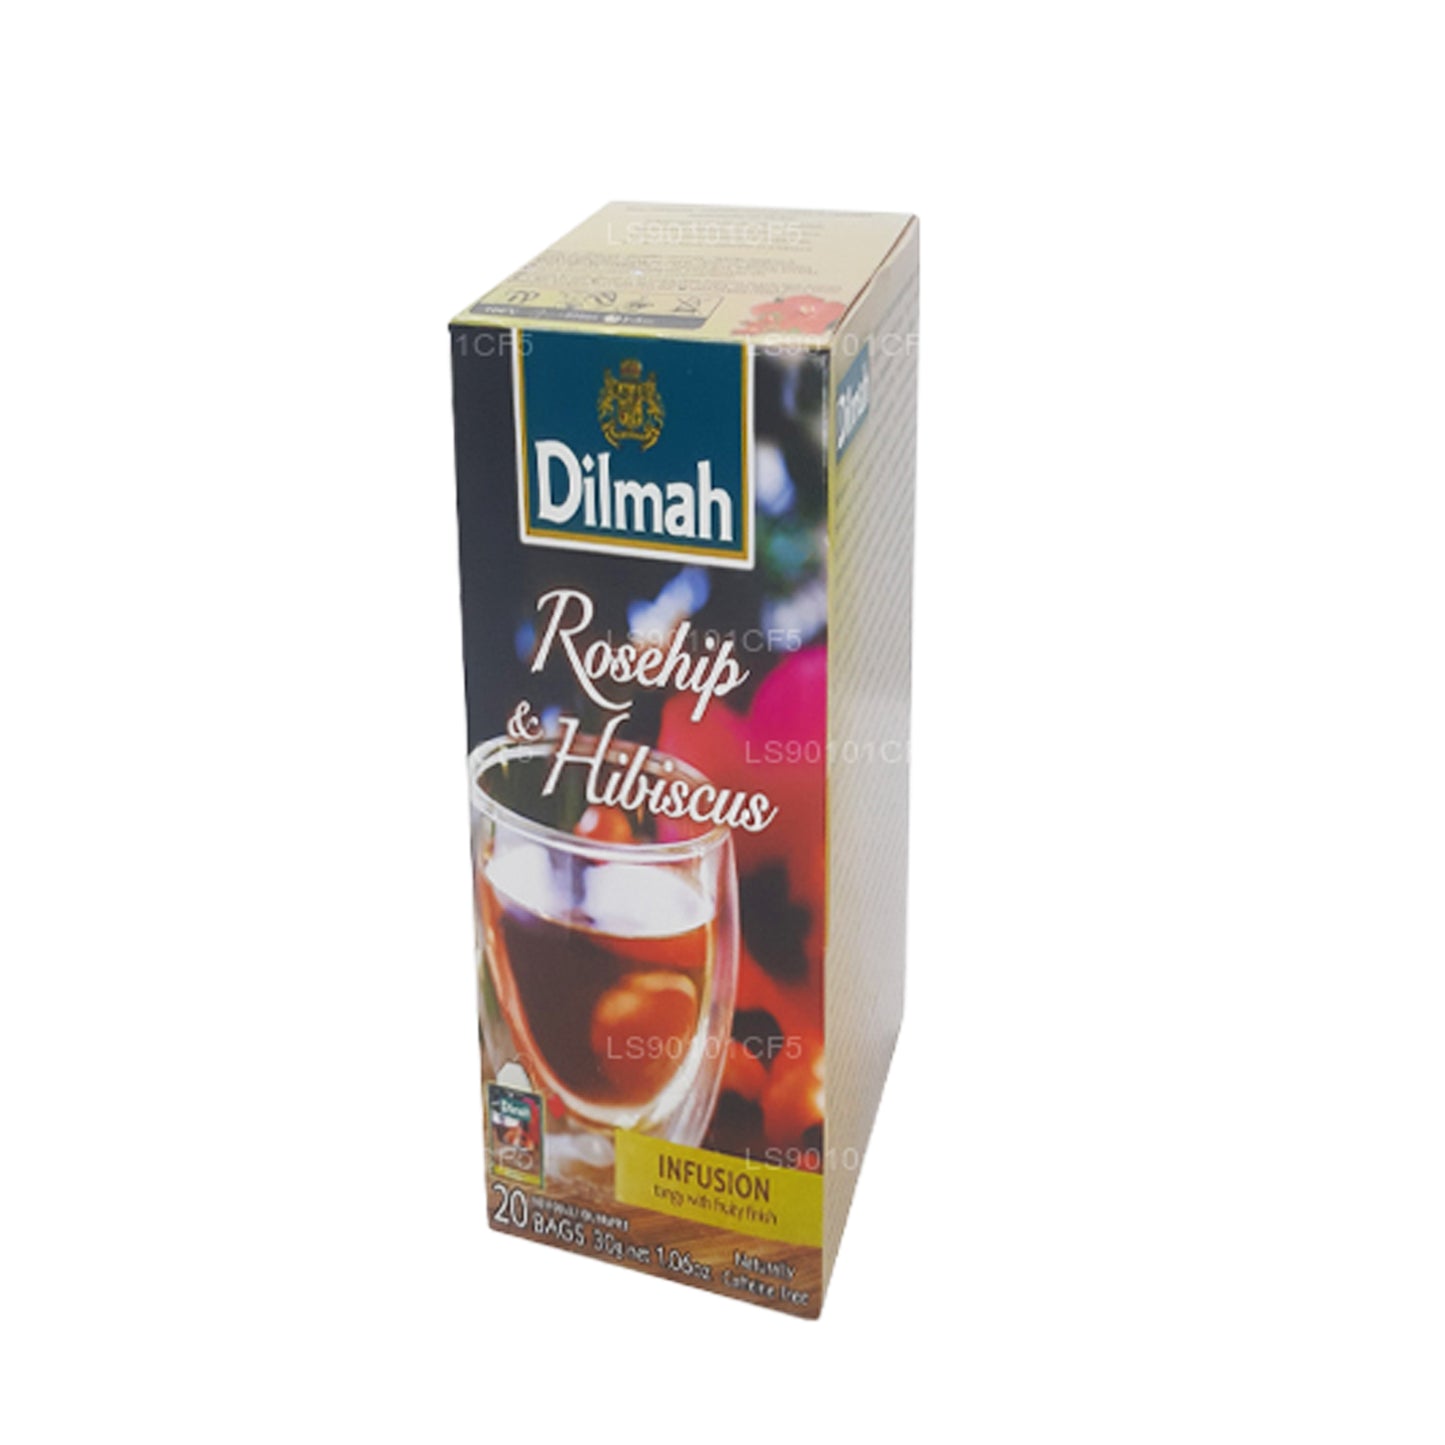 Dilmah Rosehip & Hibiscus Flavored Black Tea (30g)